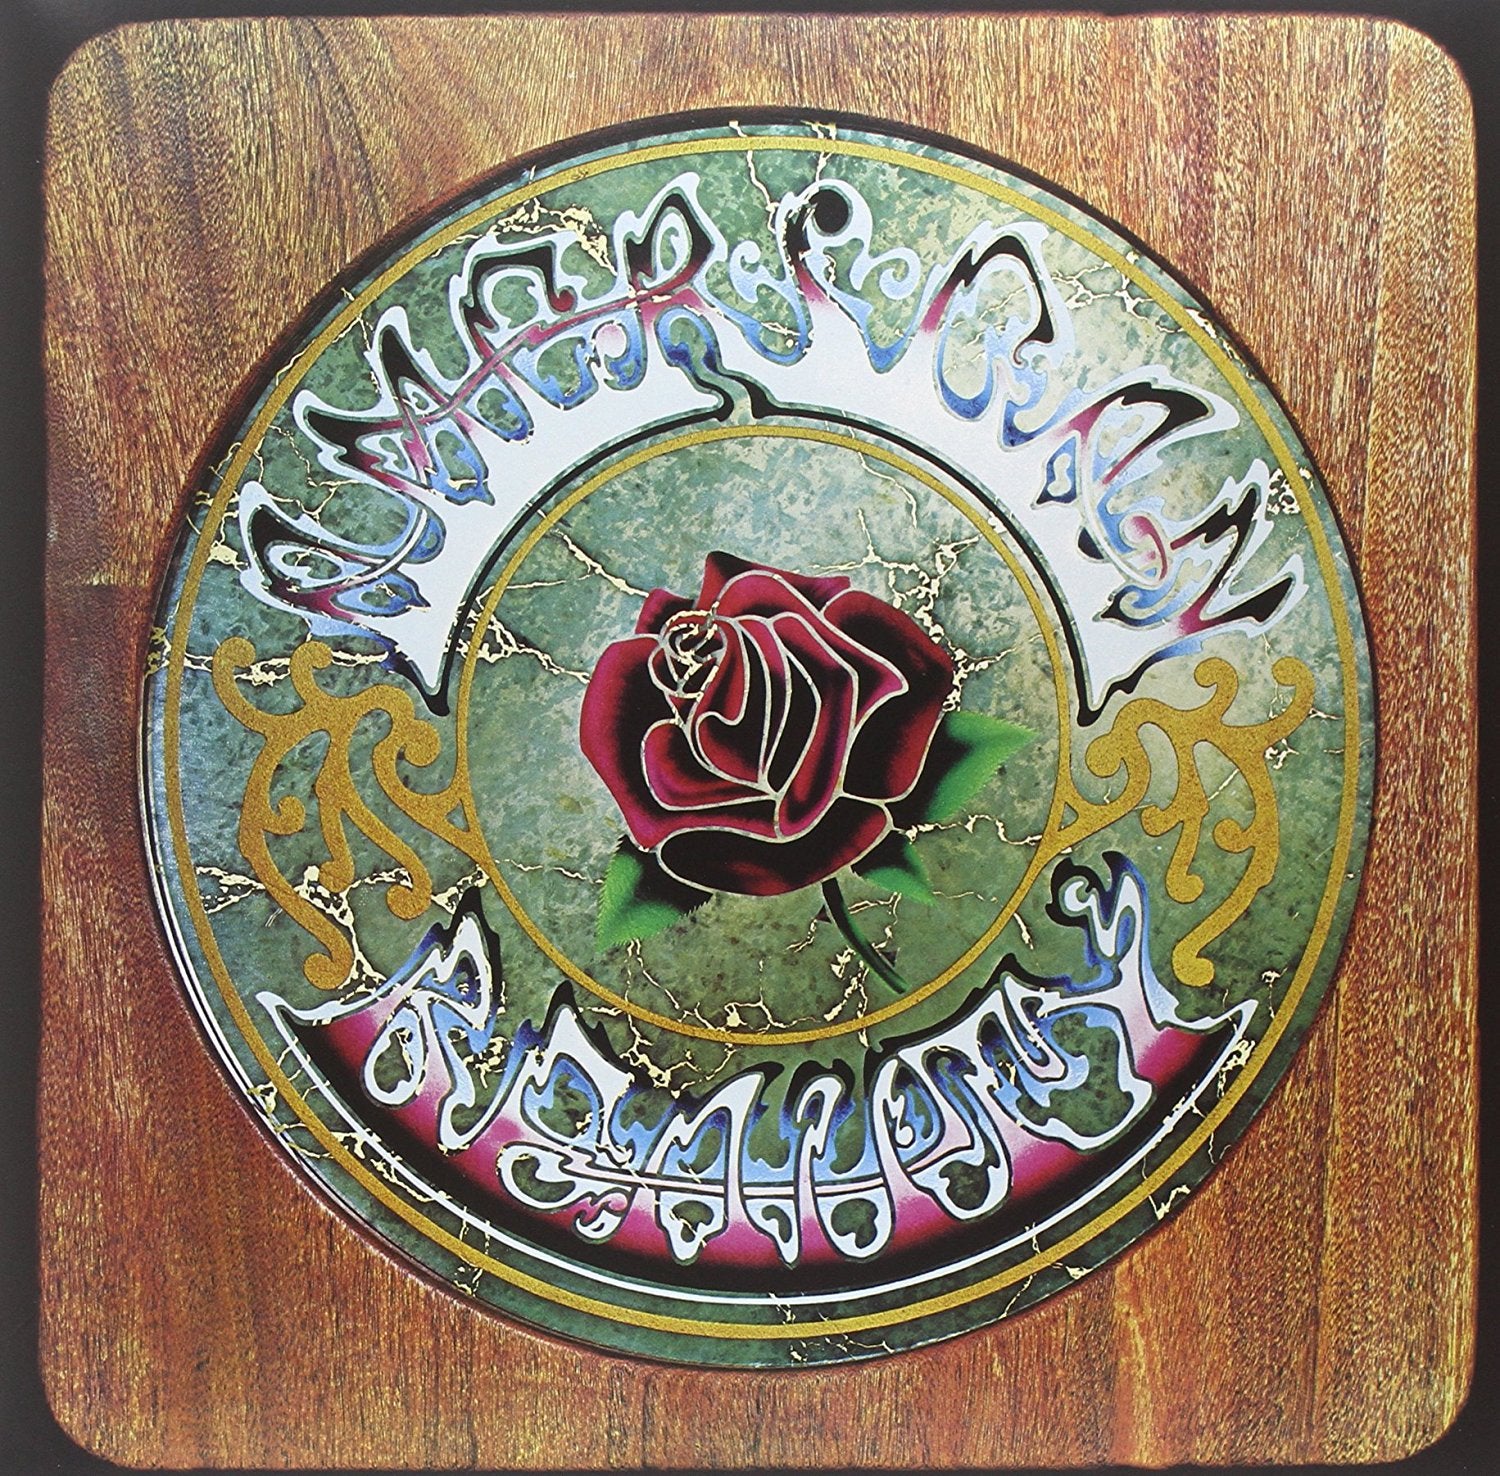 10 Best Grateful Dead to Own on Vinyl - Me, Please